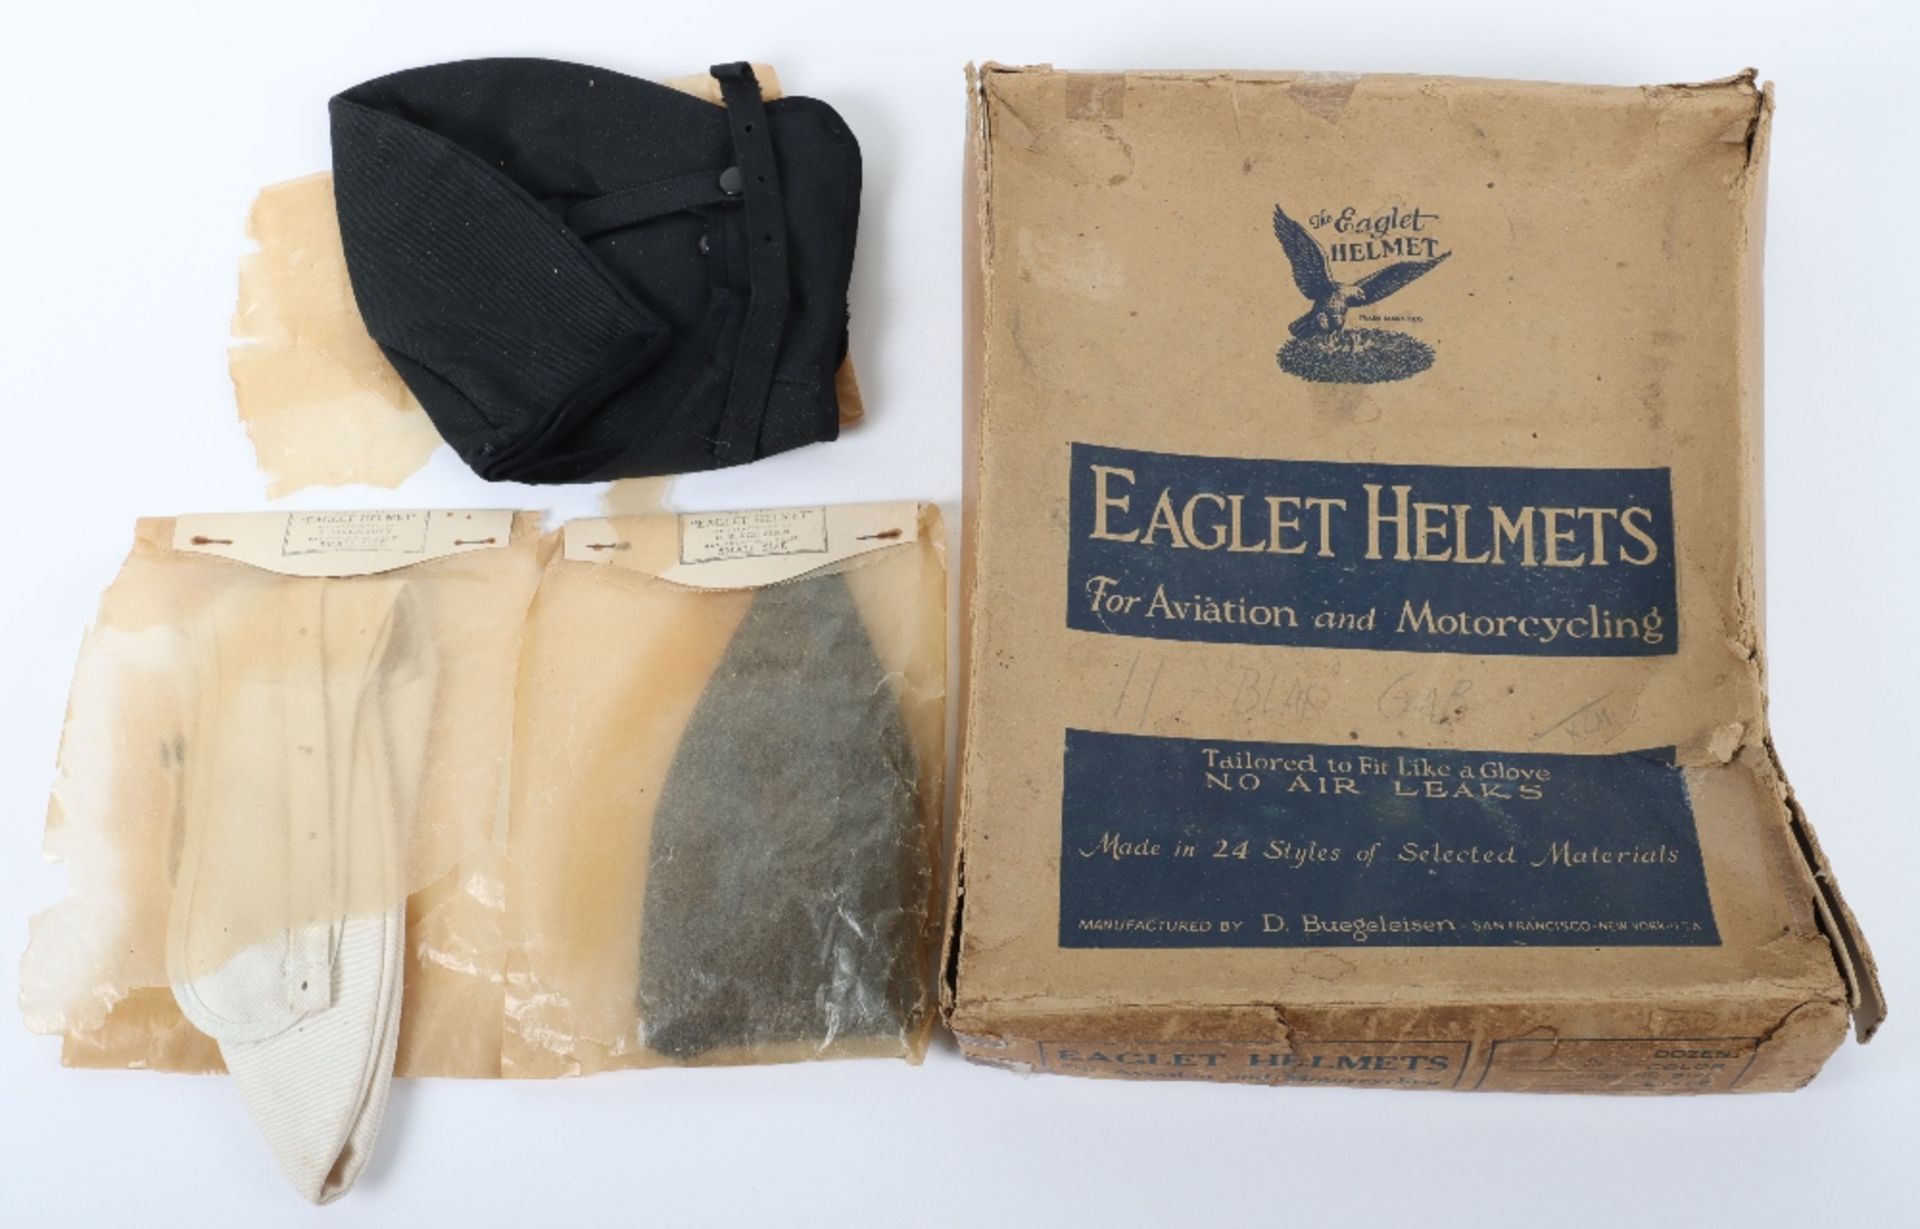 Trade Box for Eagle Helmets